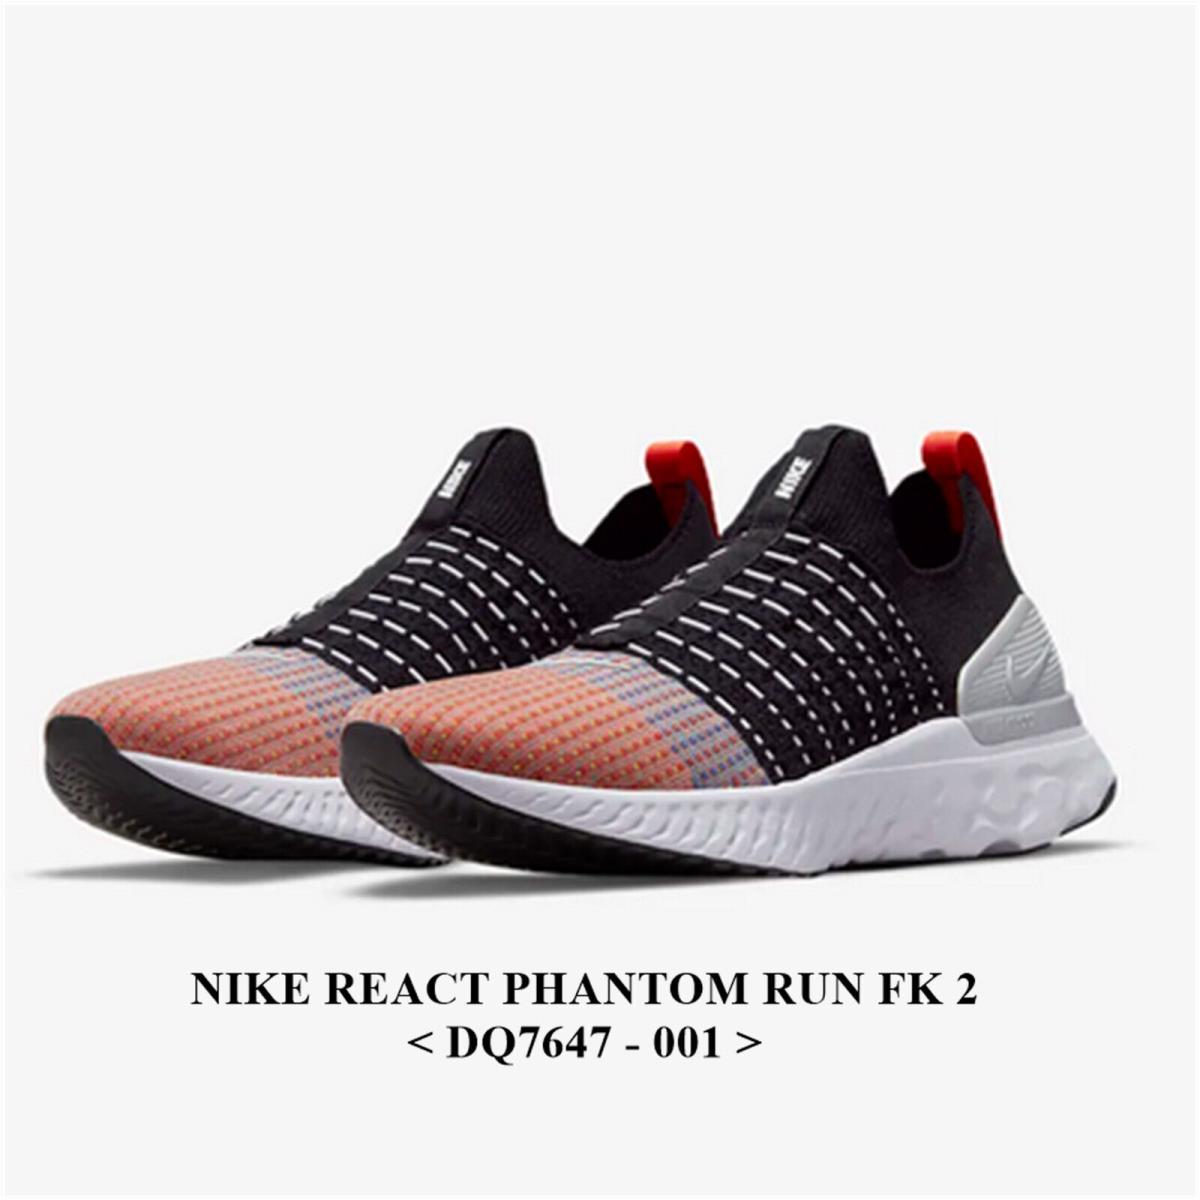 Nike React Phantom Run FK 2 DQ7647 - 001 Men`s Running Shoes.n NO Lid - Black-White -Orange